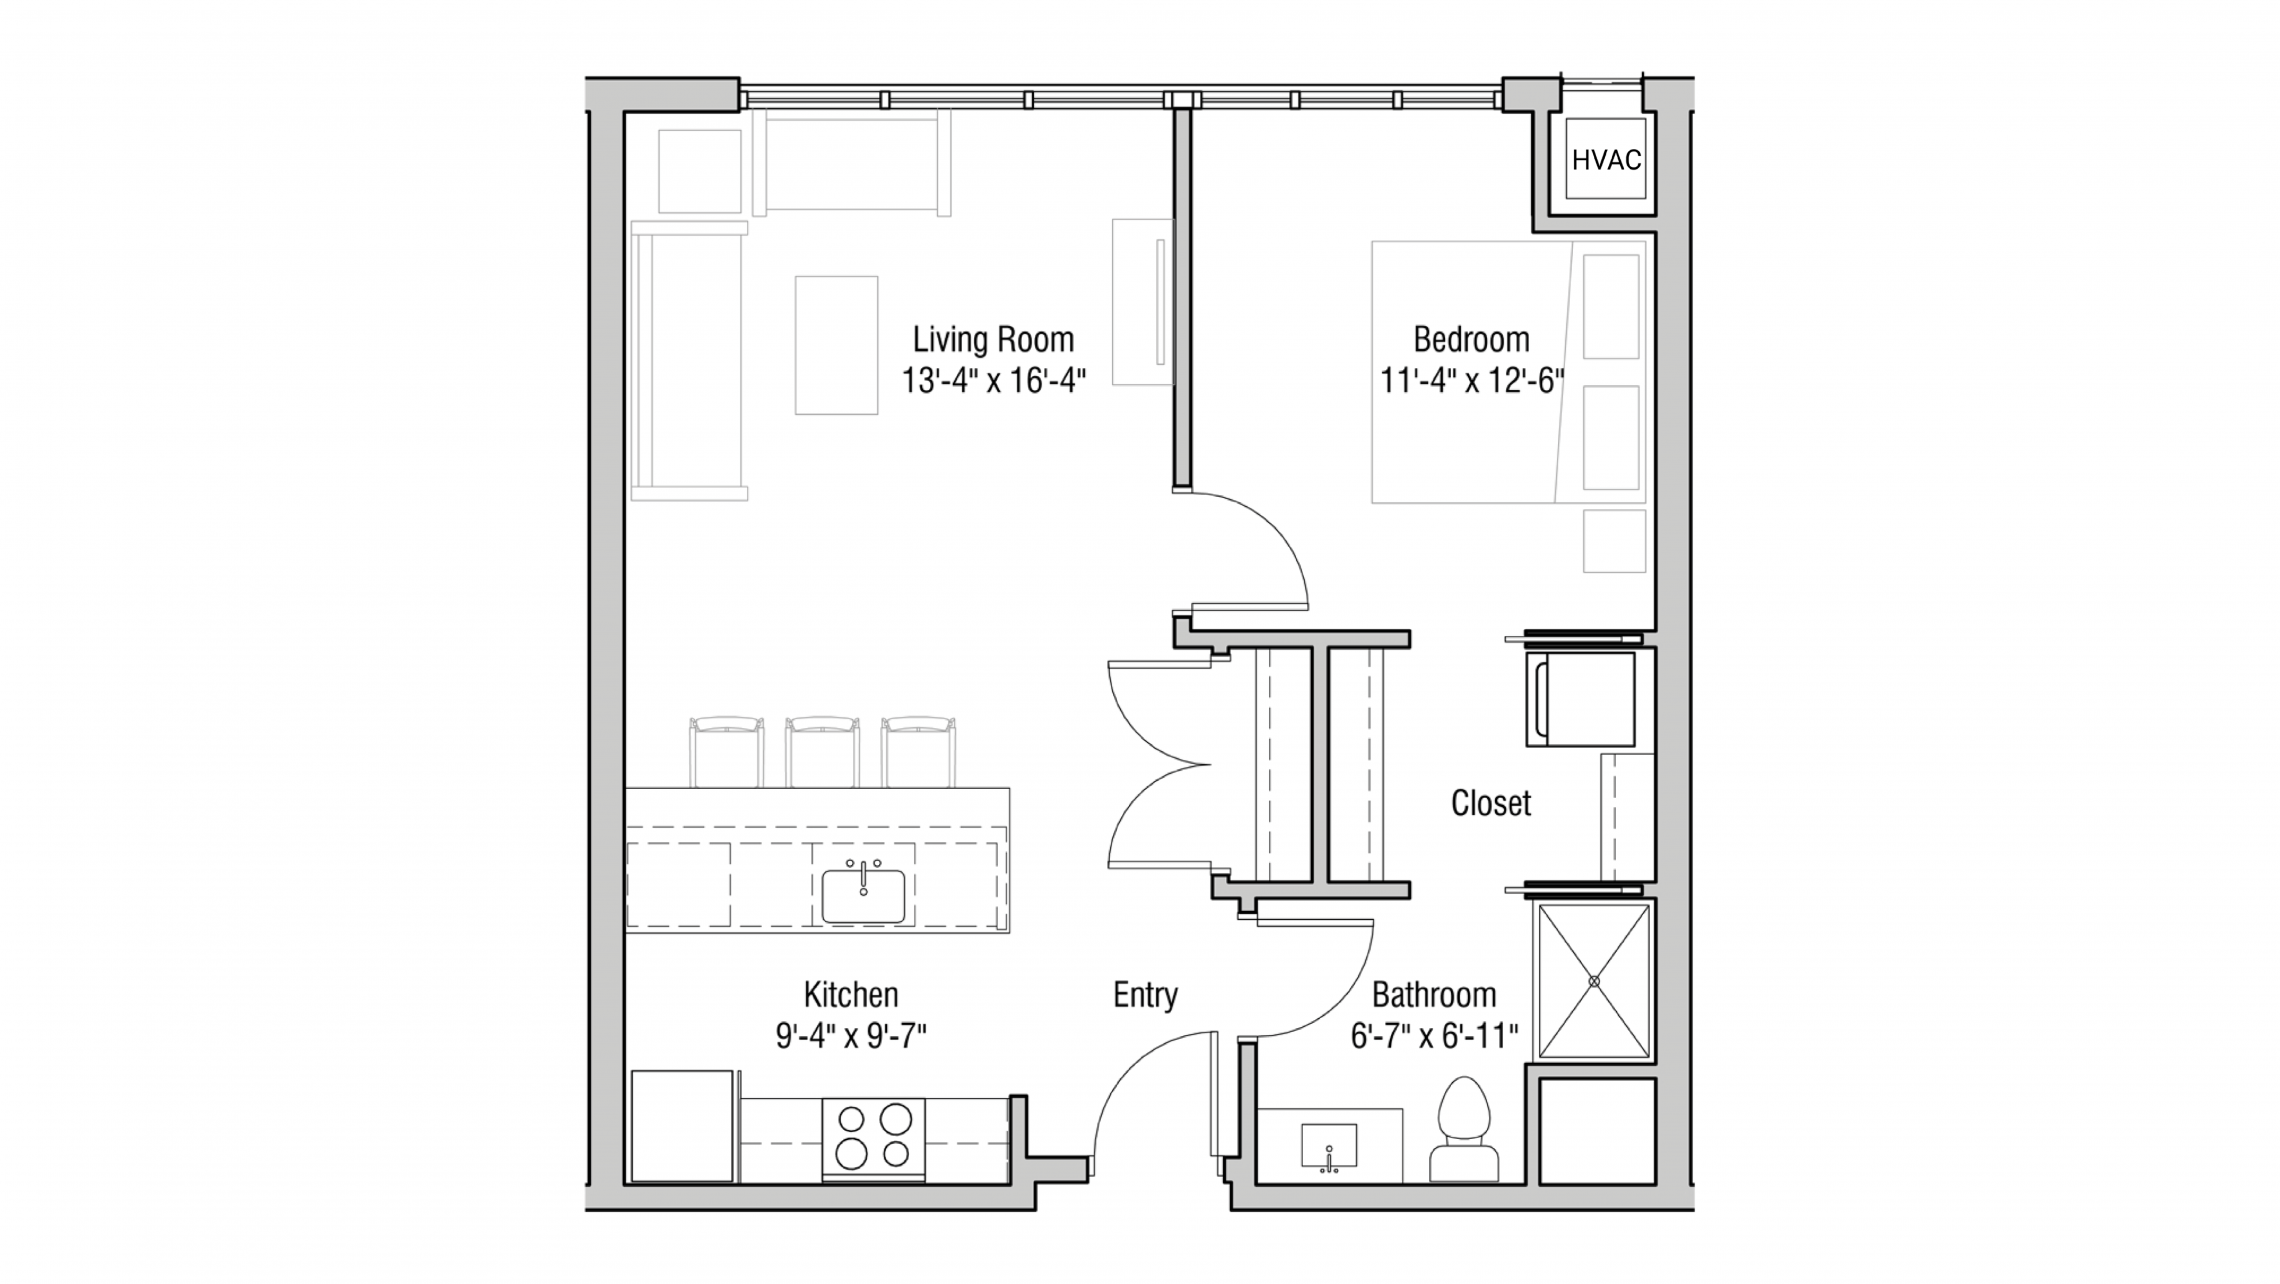 ULI Quarter Row 419 - One Bedroom, One Bathroom